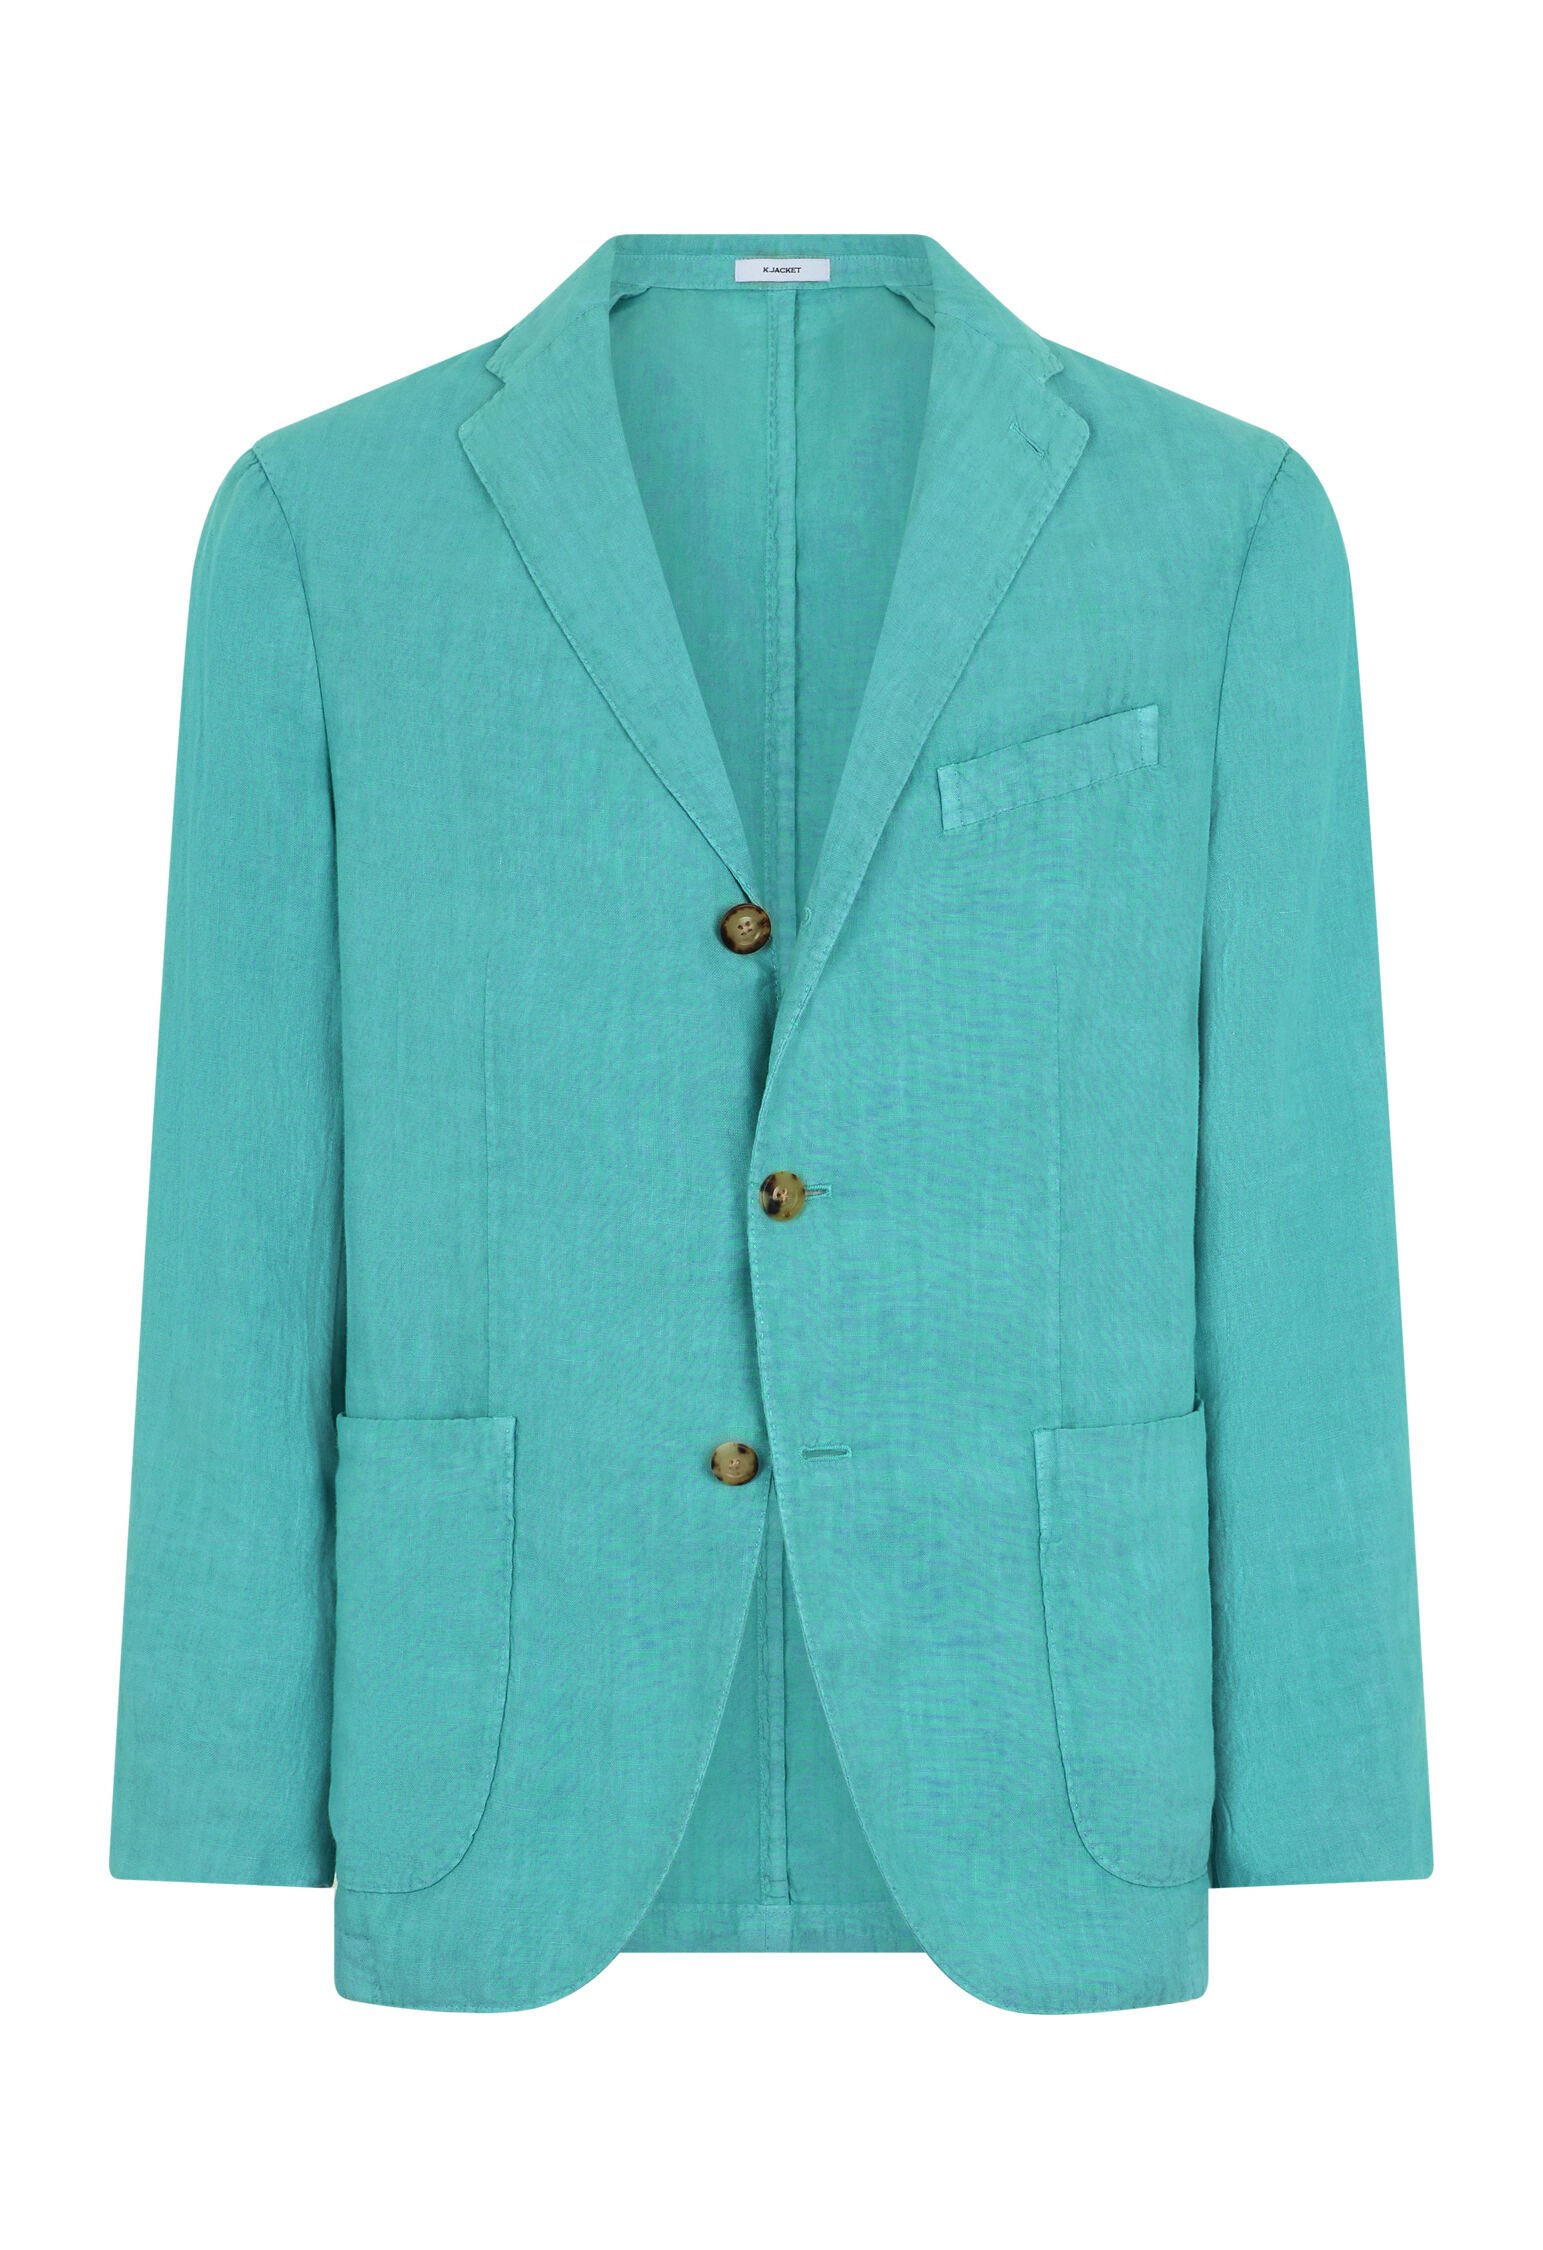 Boglioli K-Jacket tailored blazer - Green